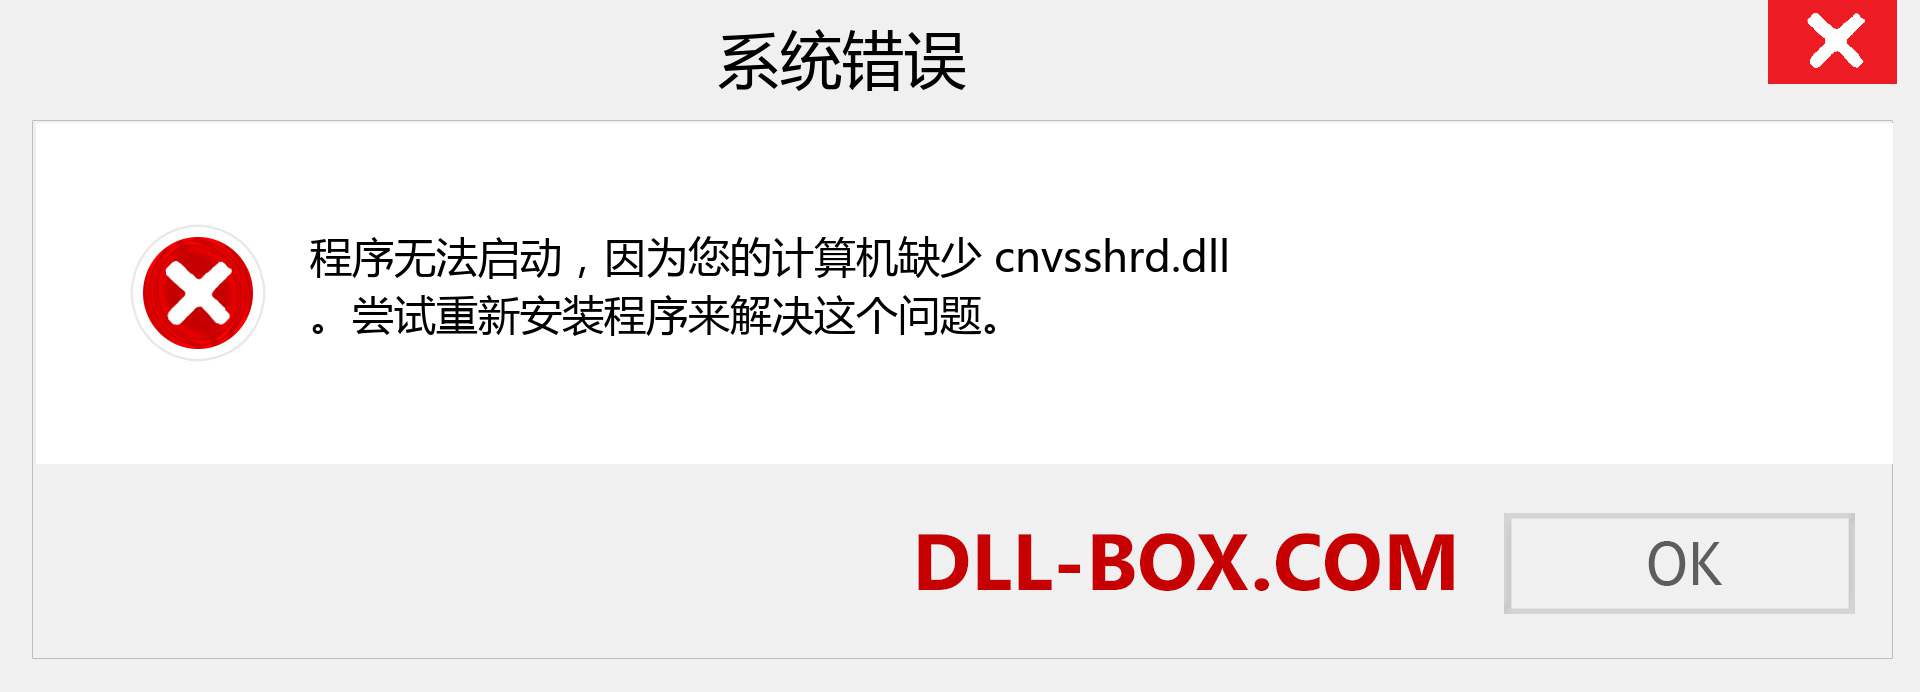 cnvsshrd.dll 文件丢失？。 适用于 Windows 7、8、10 的下载 - 修复 Windows、照片、图像上的 cnvsshrd dll 丢失错误